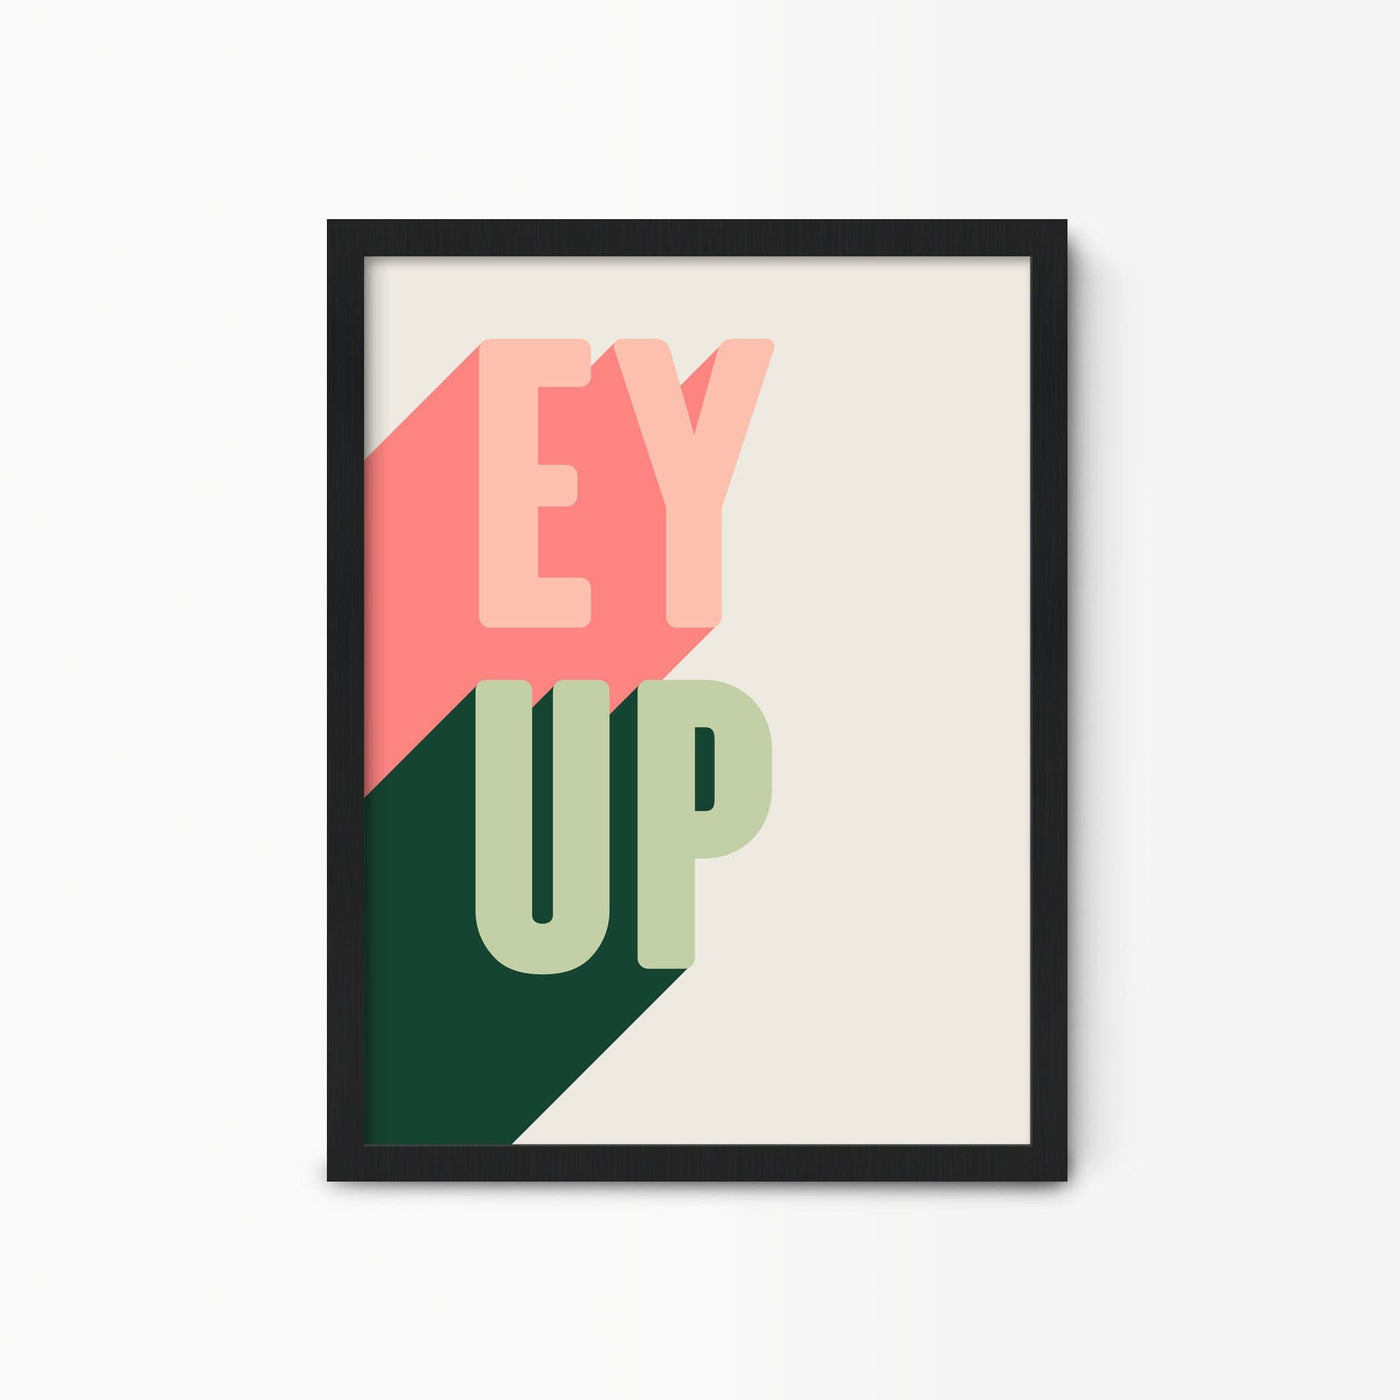 Green Lili 30x40cm (12x16") / Black Frame EY UP Typography Print